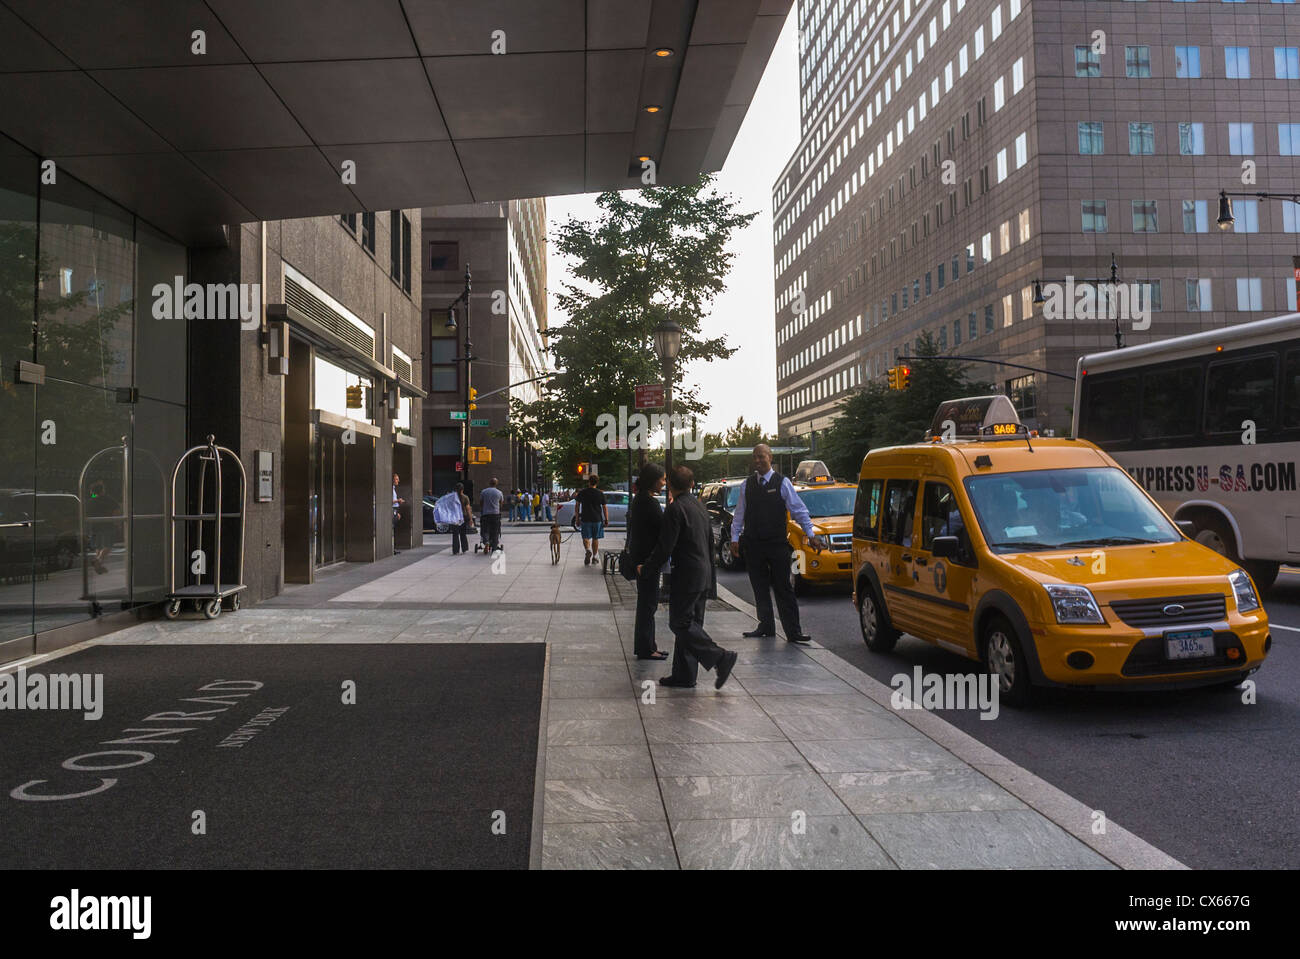 New York, NY, USA, Luxury Hotel, Conran, Front, Taxi Cab, Street Scenes, Business Center Manhattan Stock Photo